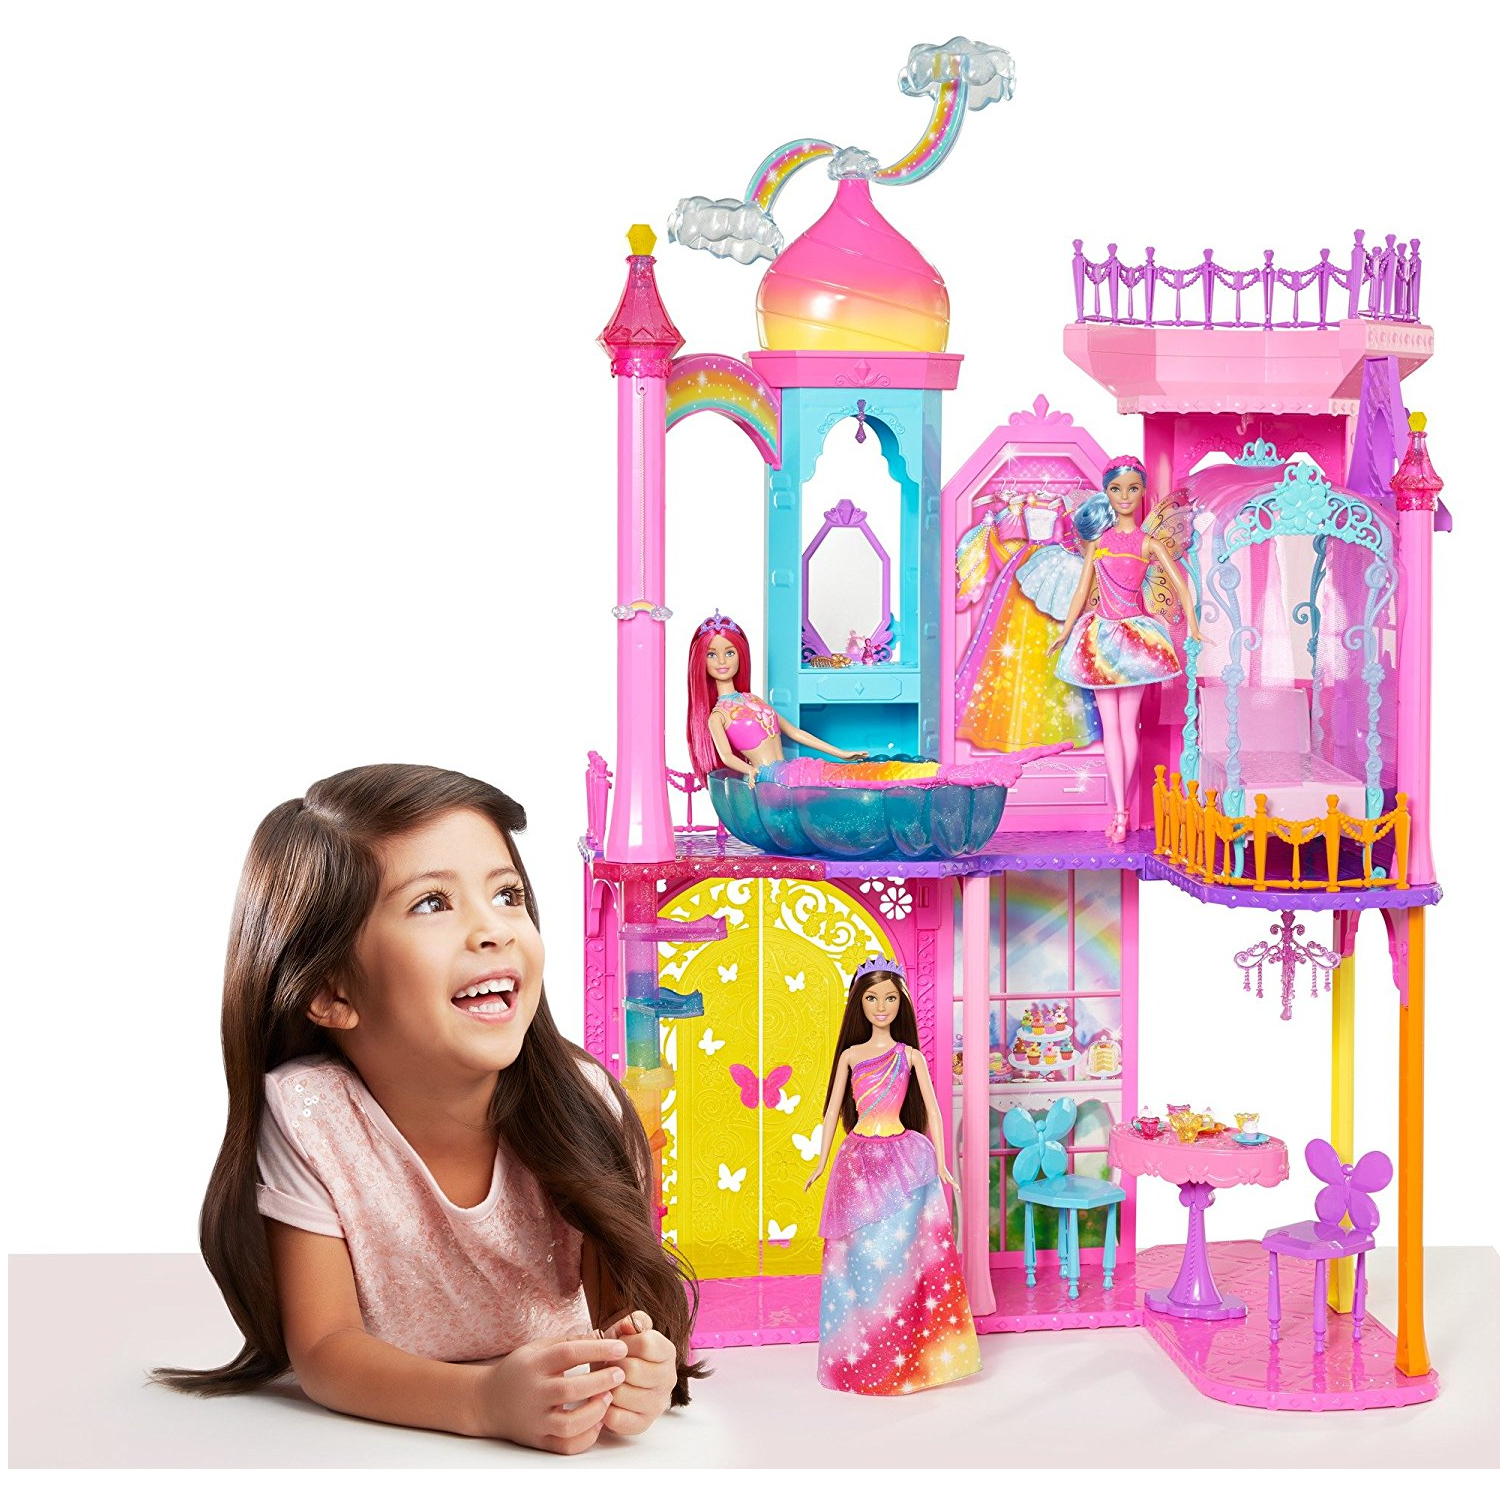 Barbie Rainbow Cove Princess Castle Playset – Only $34.98!